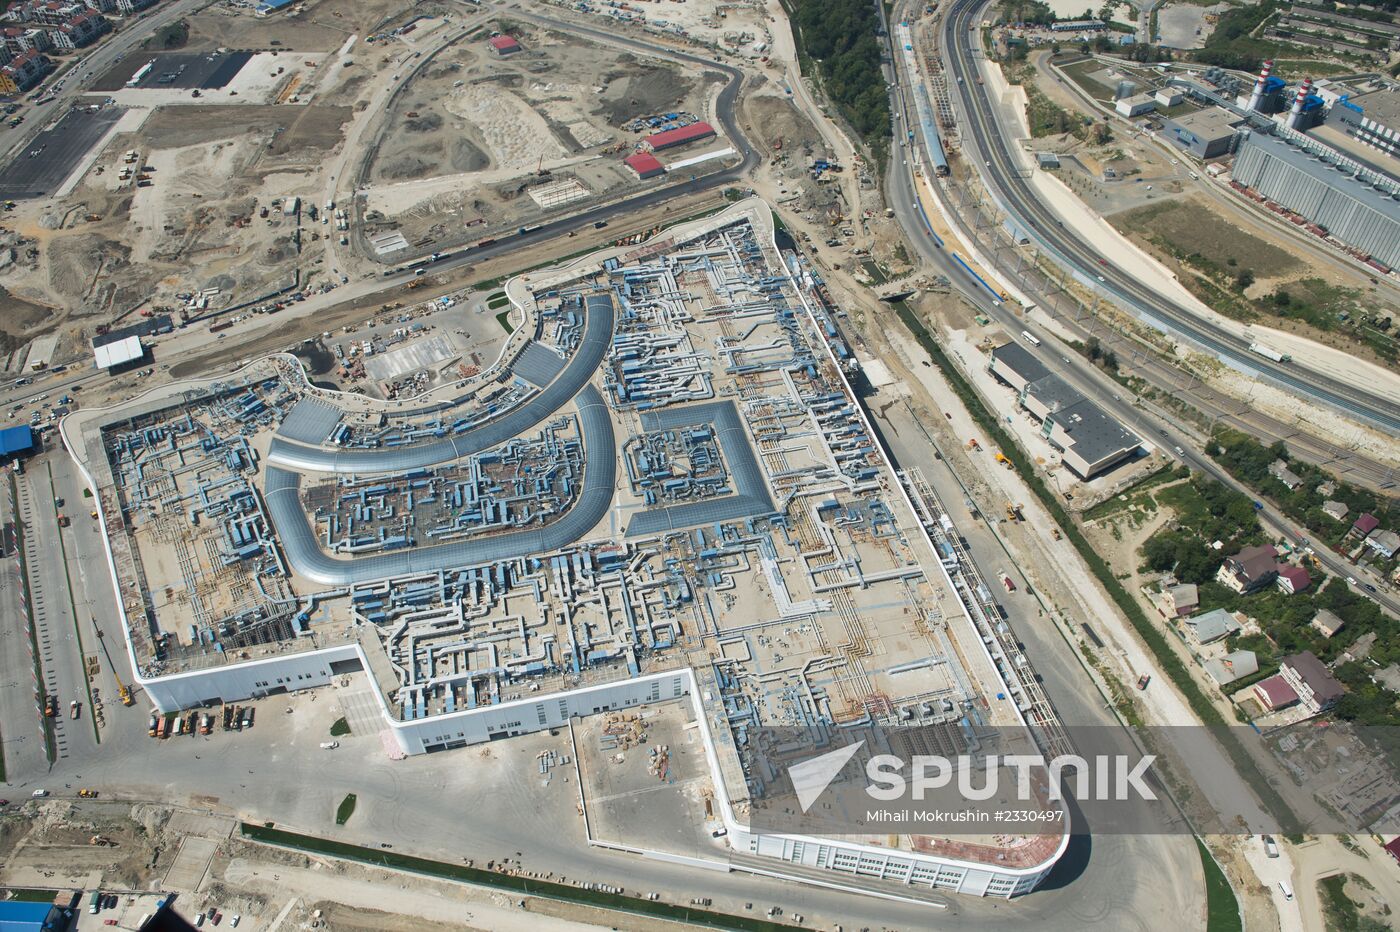 Bird's-eye view of Sochi's Olympic Park